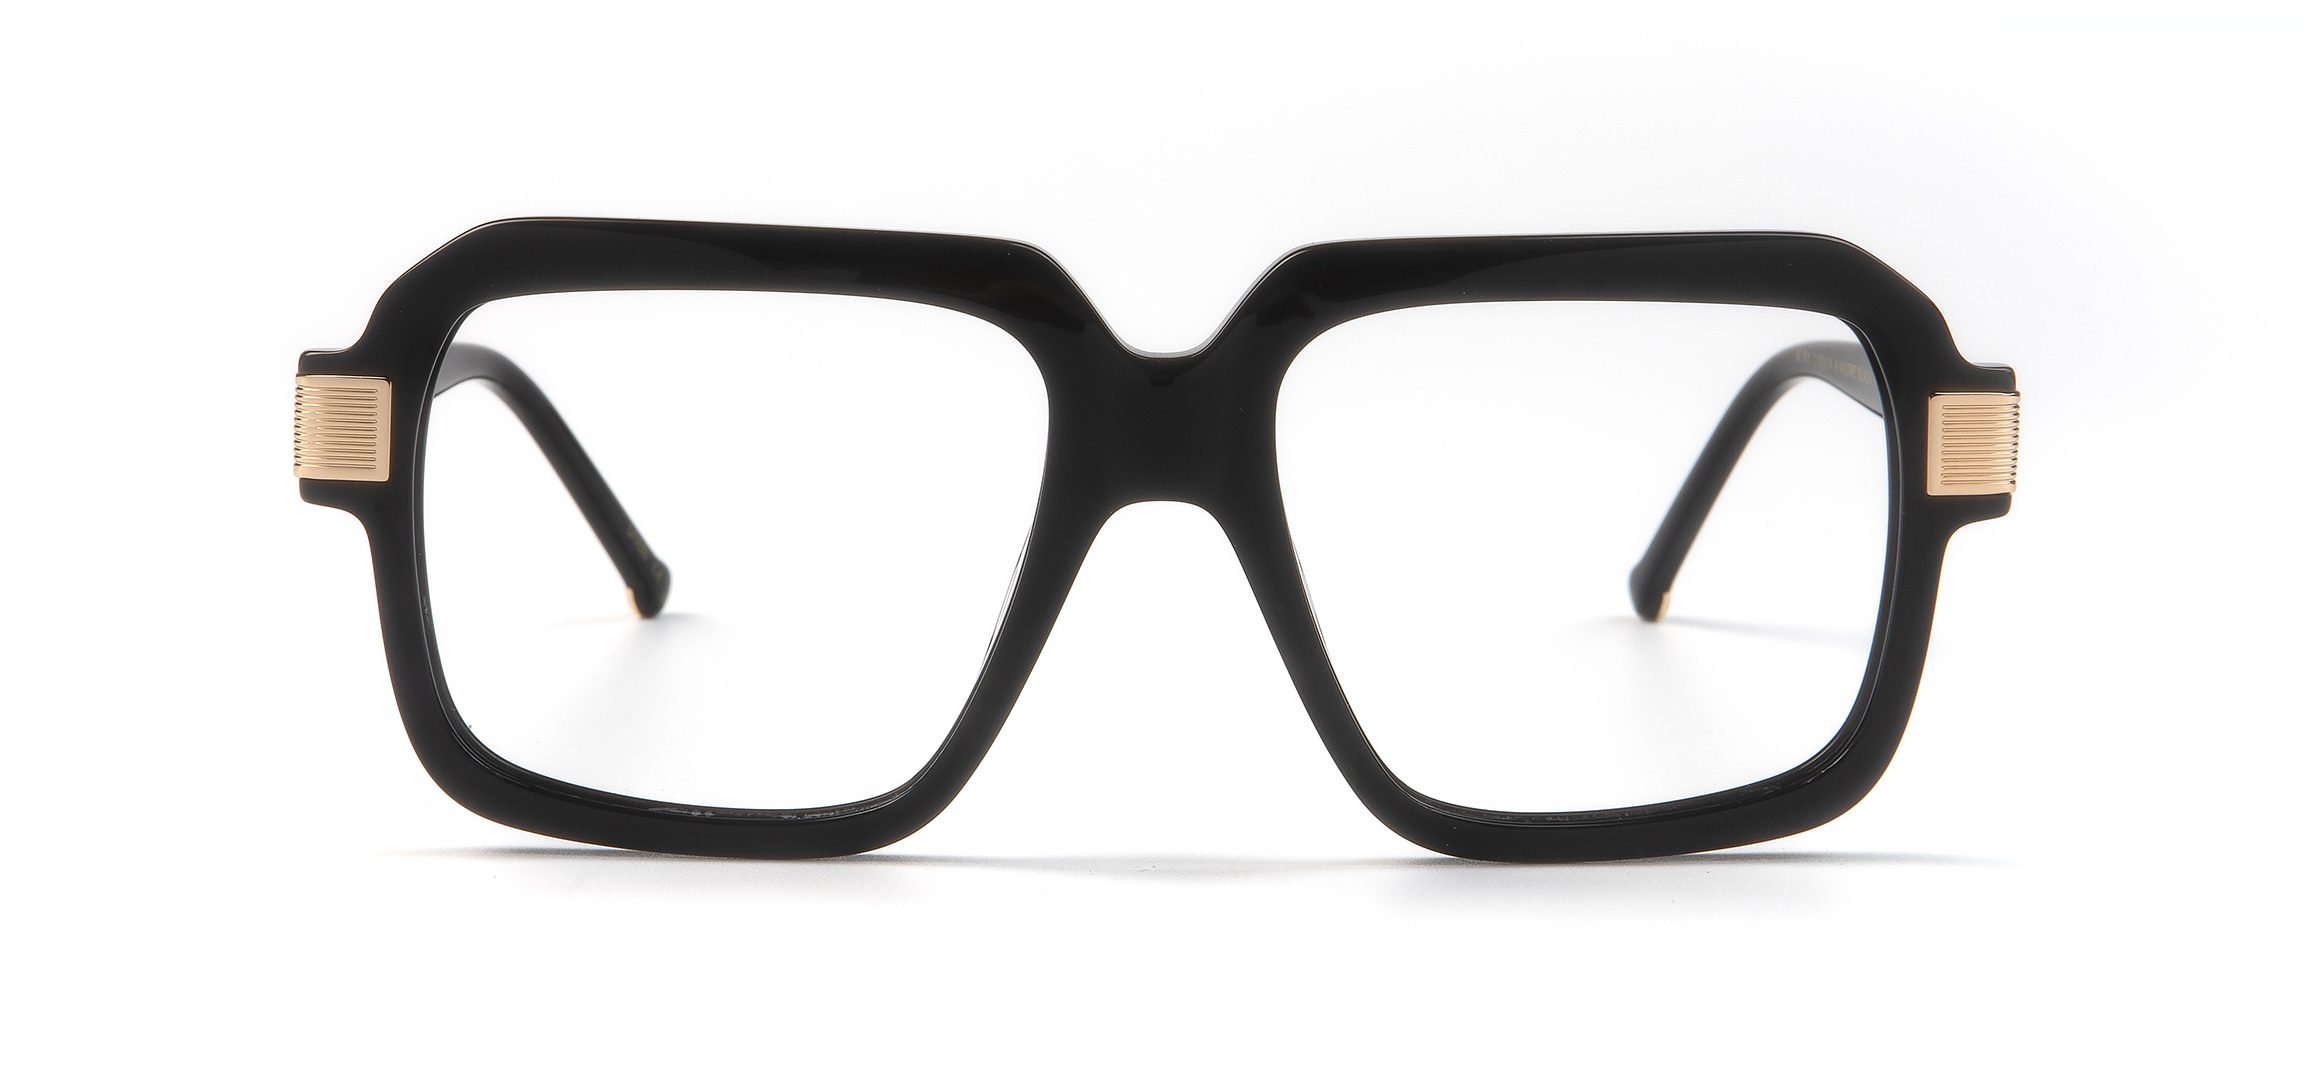 Nuestras nuevas gafas favoritas las firma Juanjo Oliva